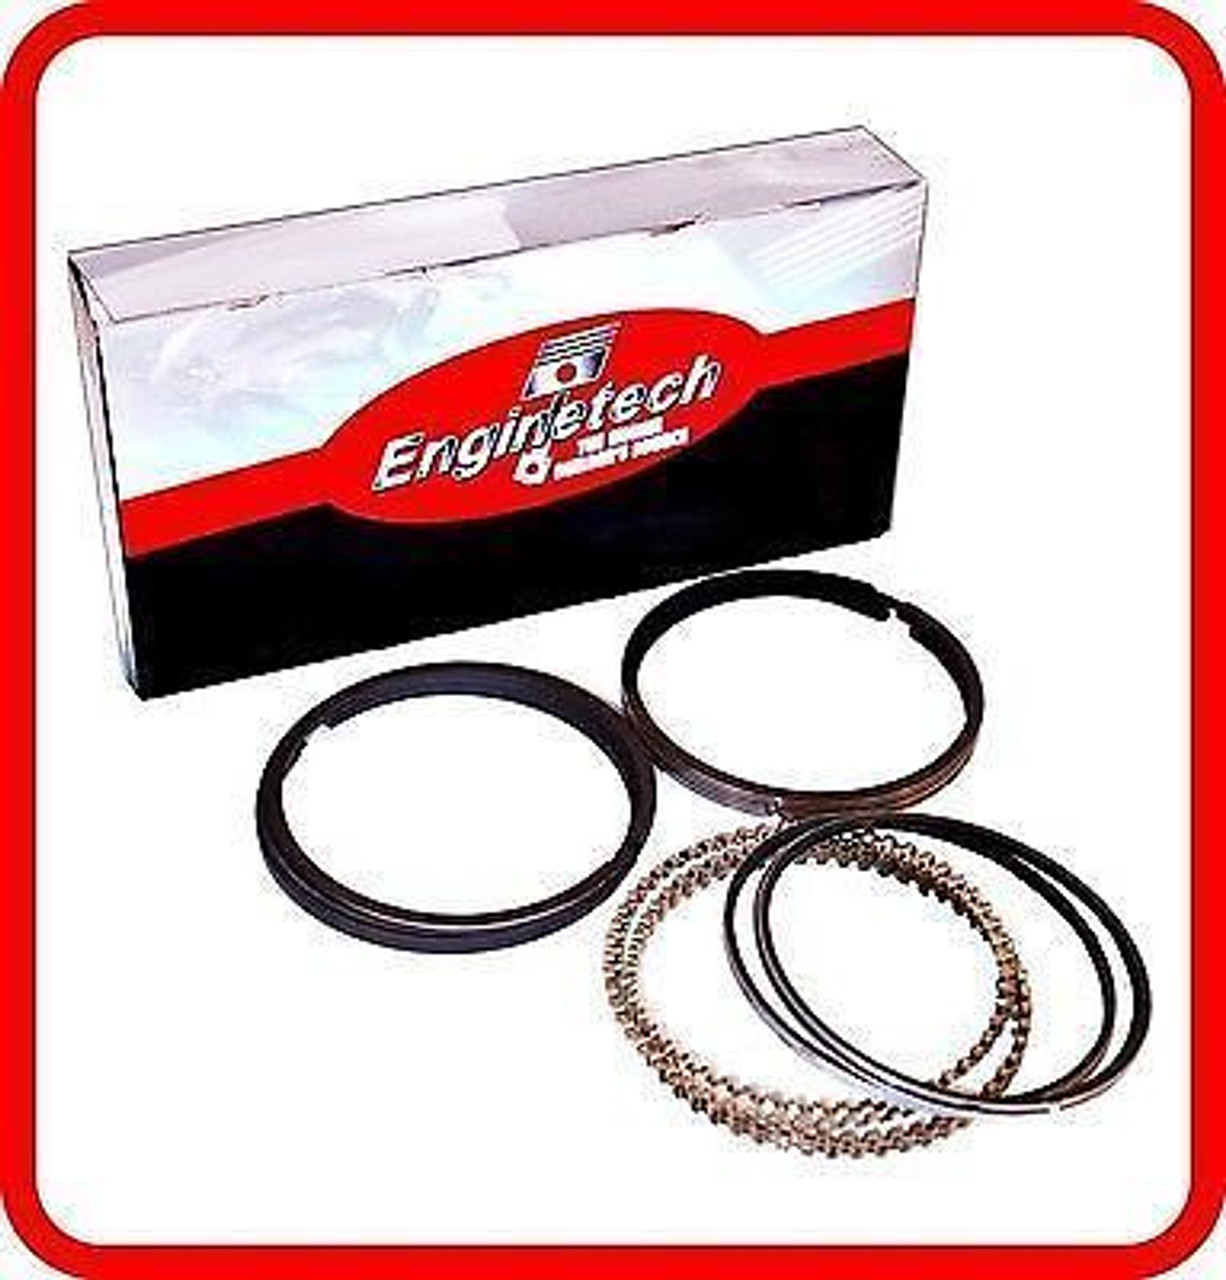 Engine Piston Ring Set - Kit Part - S95525